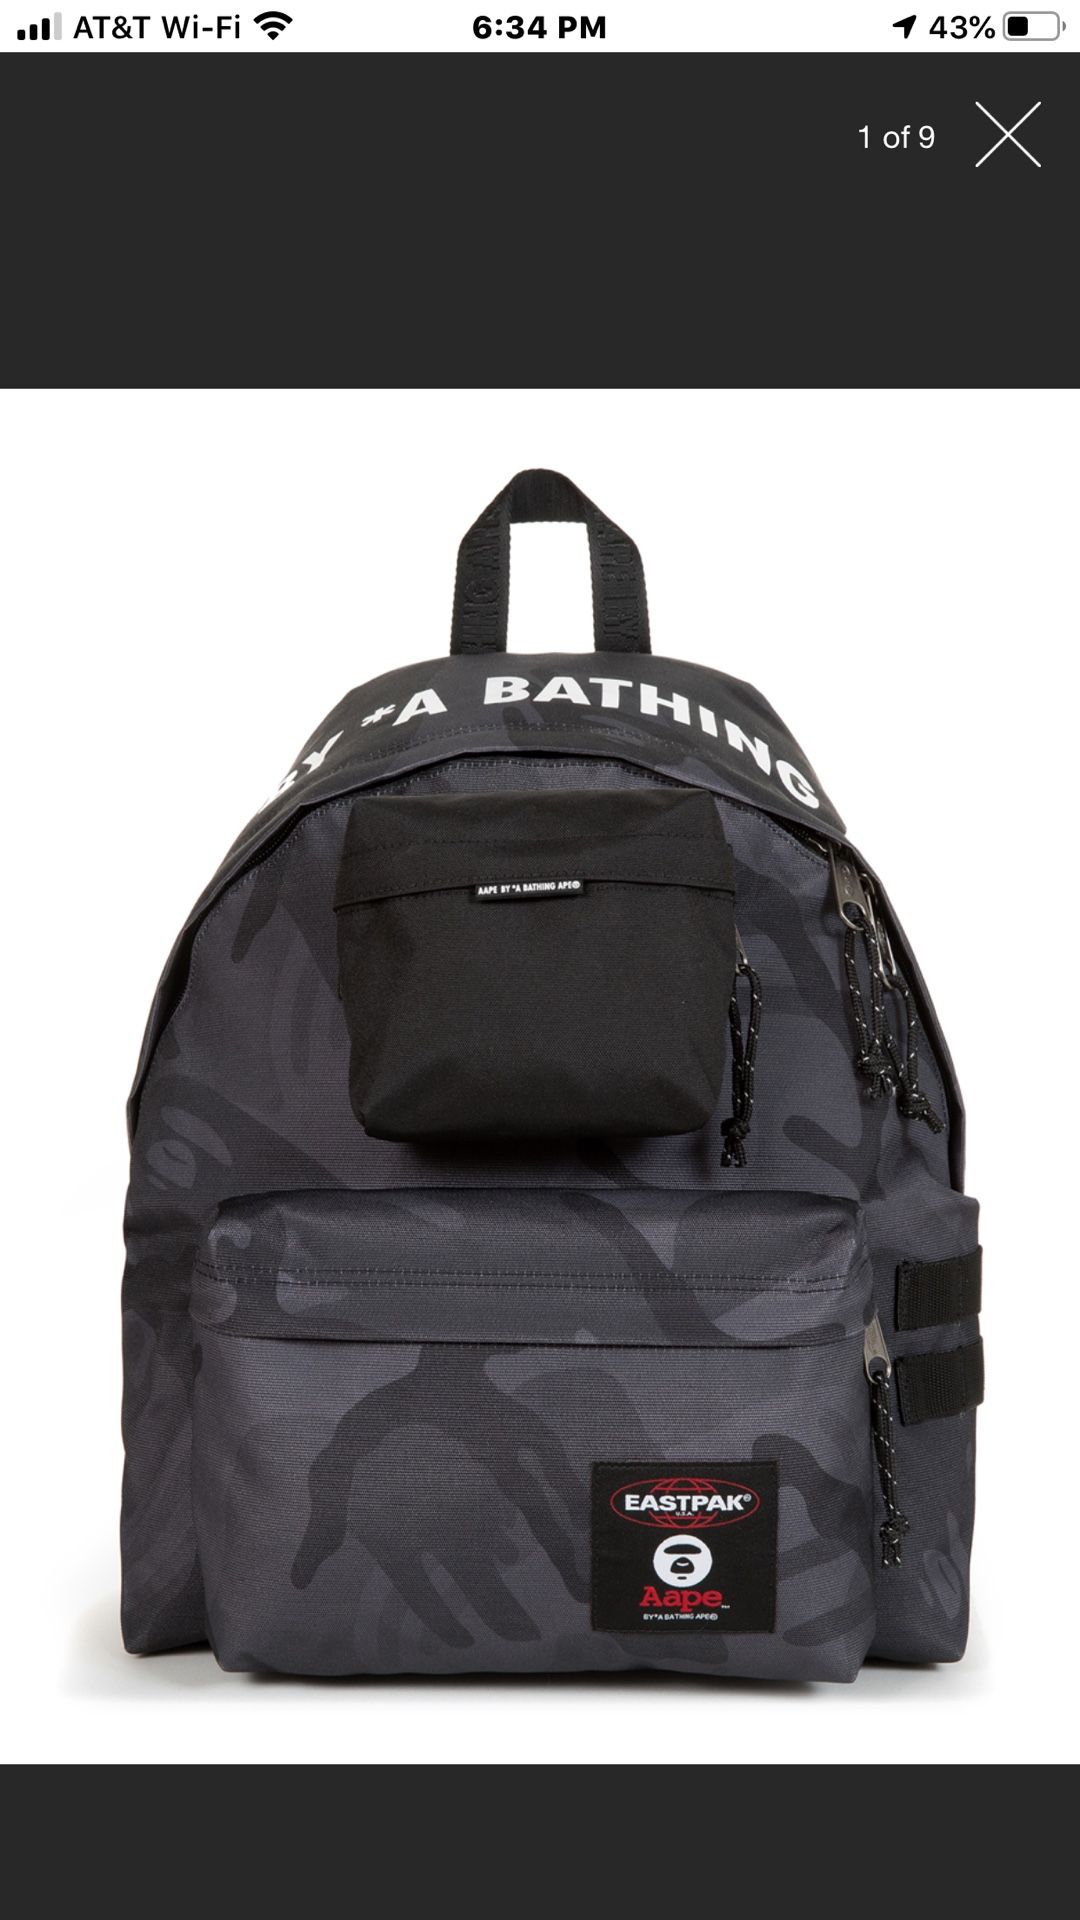 Eastpak Bathing Ape camo backpack